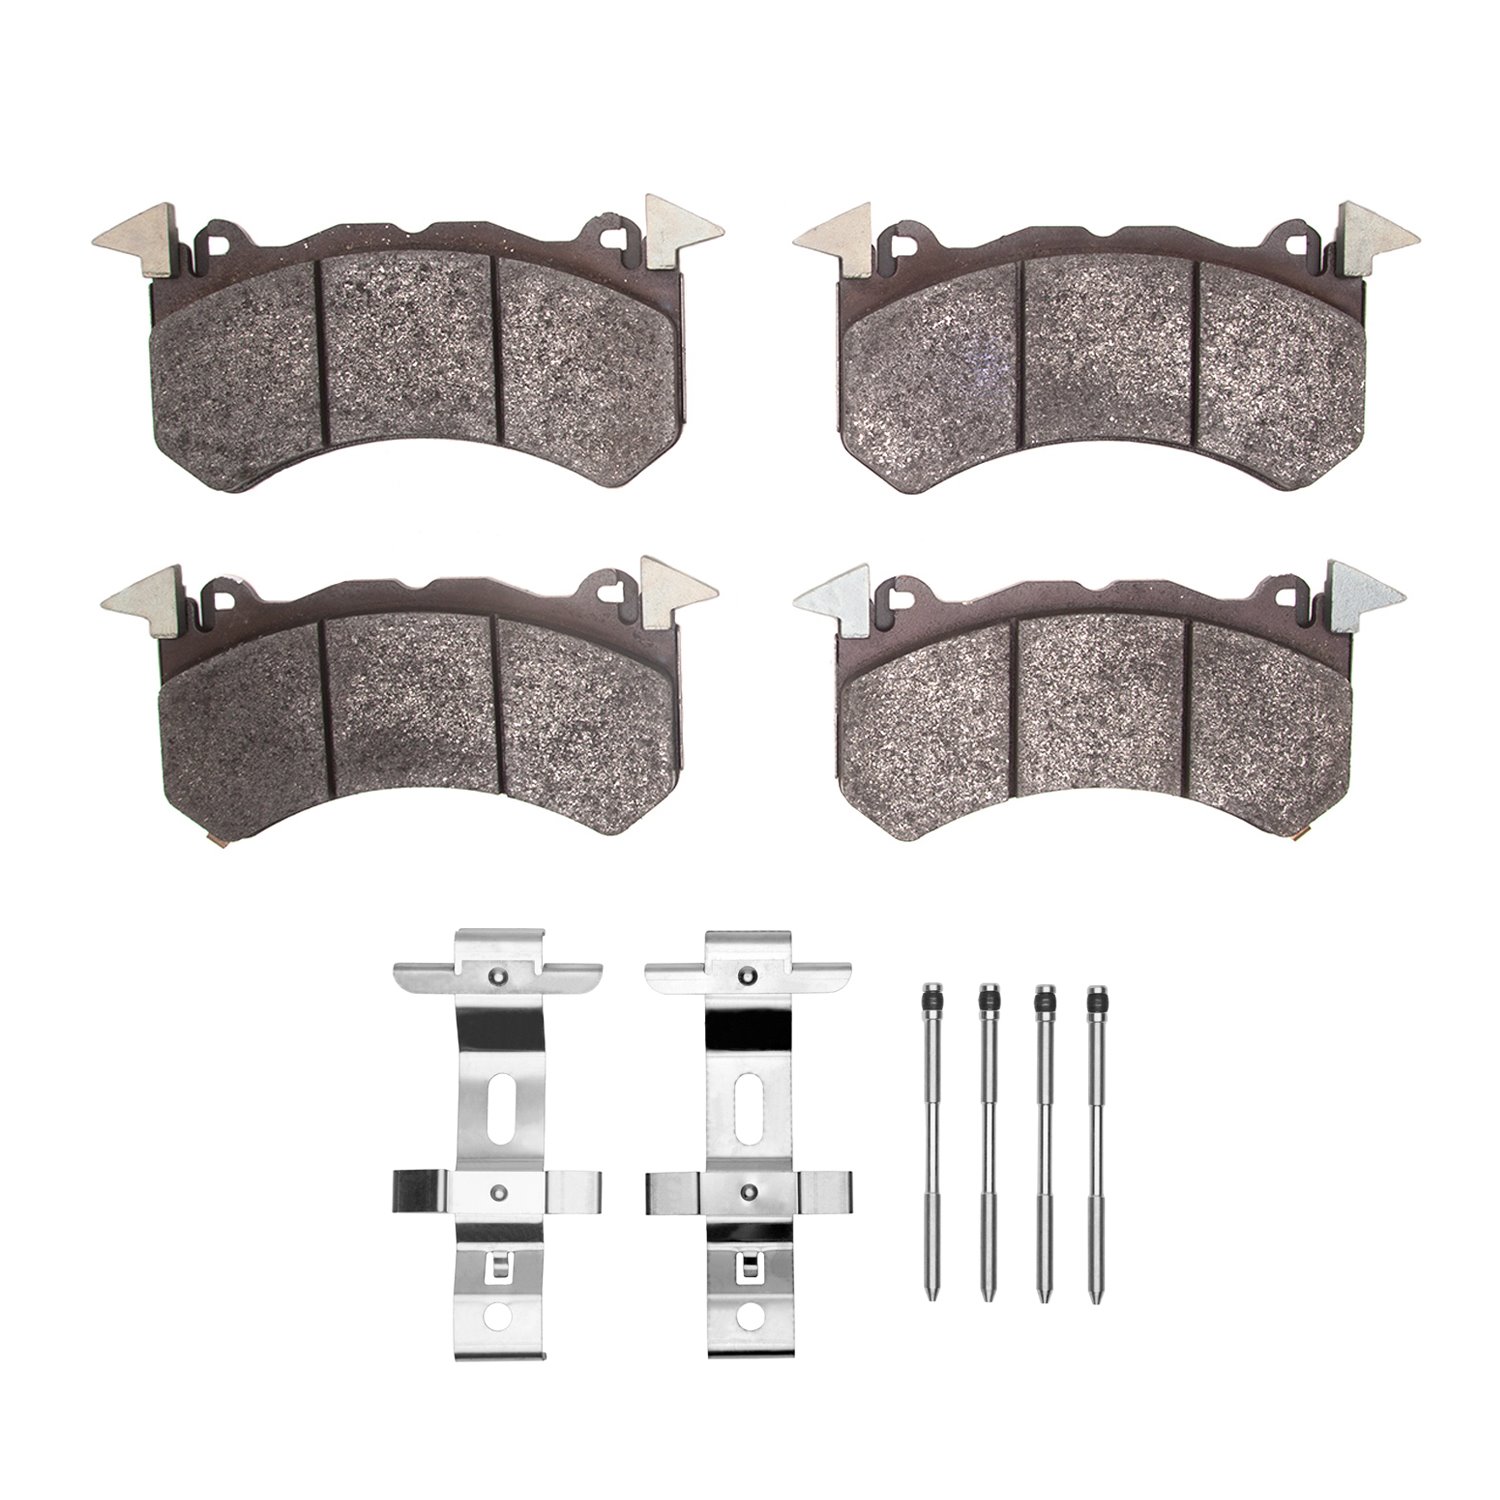 1551-2253-01 5000 Advanced Low-Metallic Brake Pads & Hardware Kit, Fits Select Acura/Honda, Position: Front